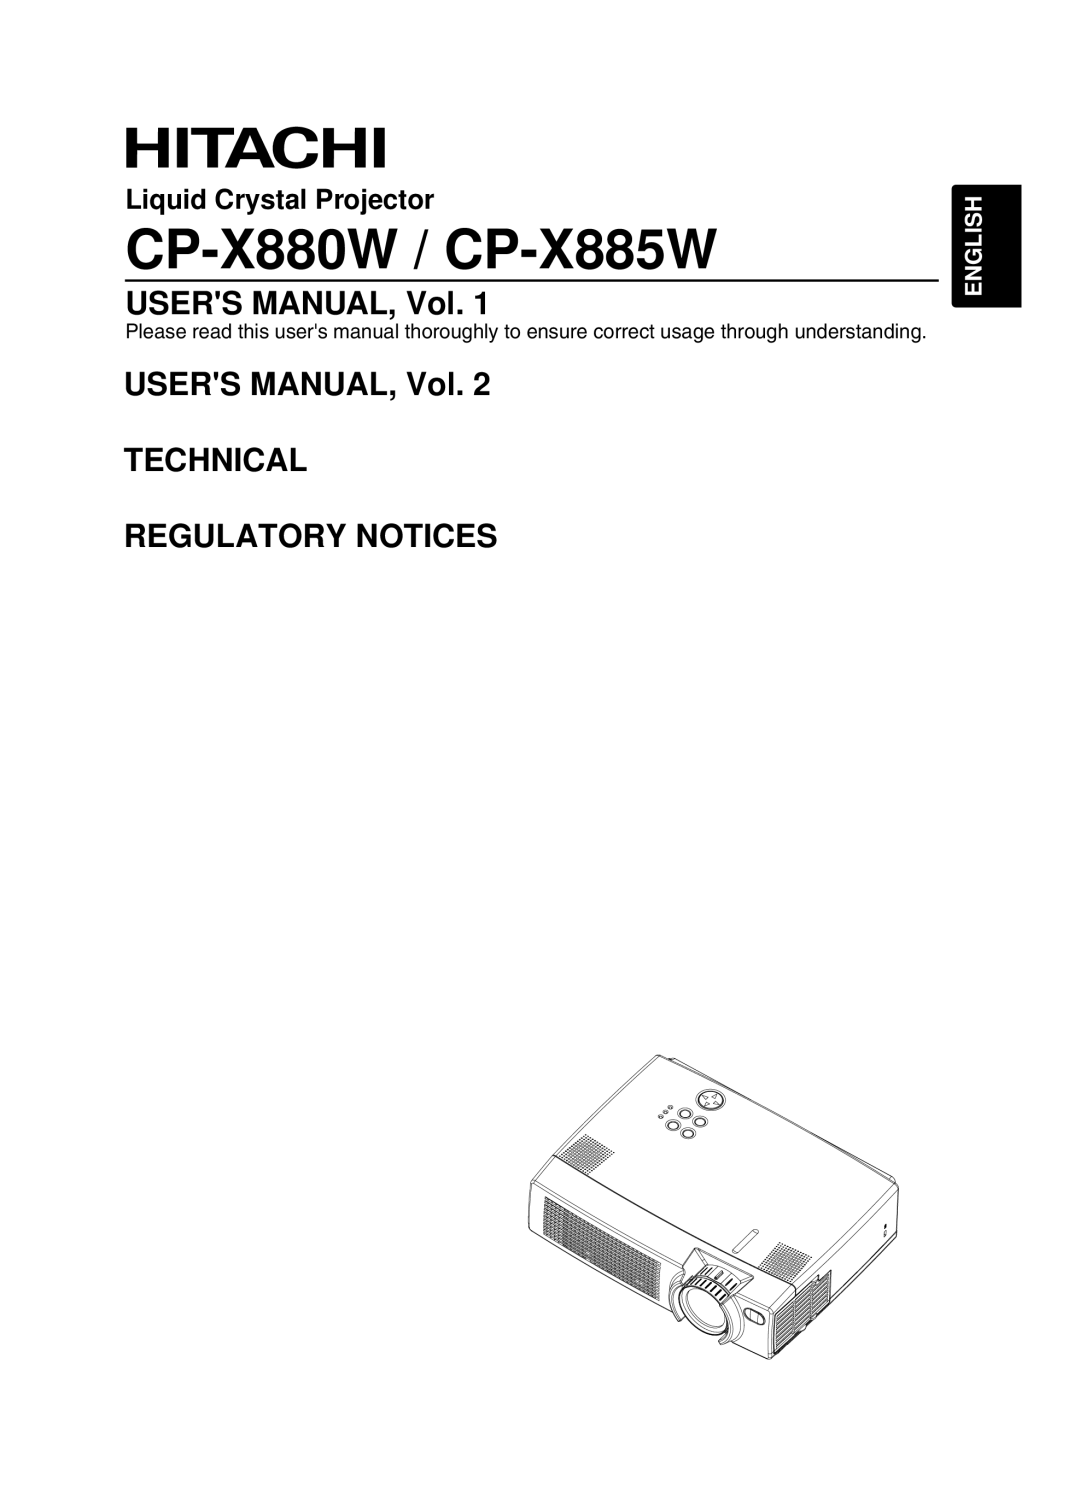 Hitachi user manual USERS MANUAL, Vol. TECHNICAL REGULATORY NOTICES, English, CP-X880W / CP-X885W 